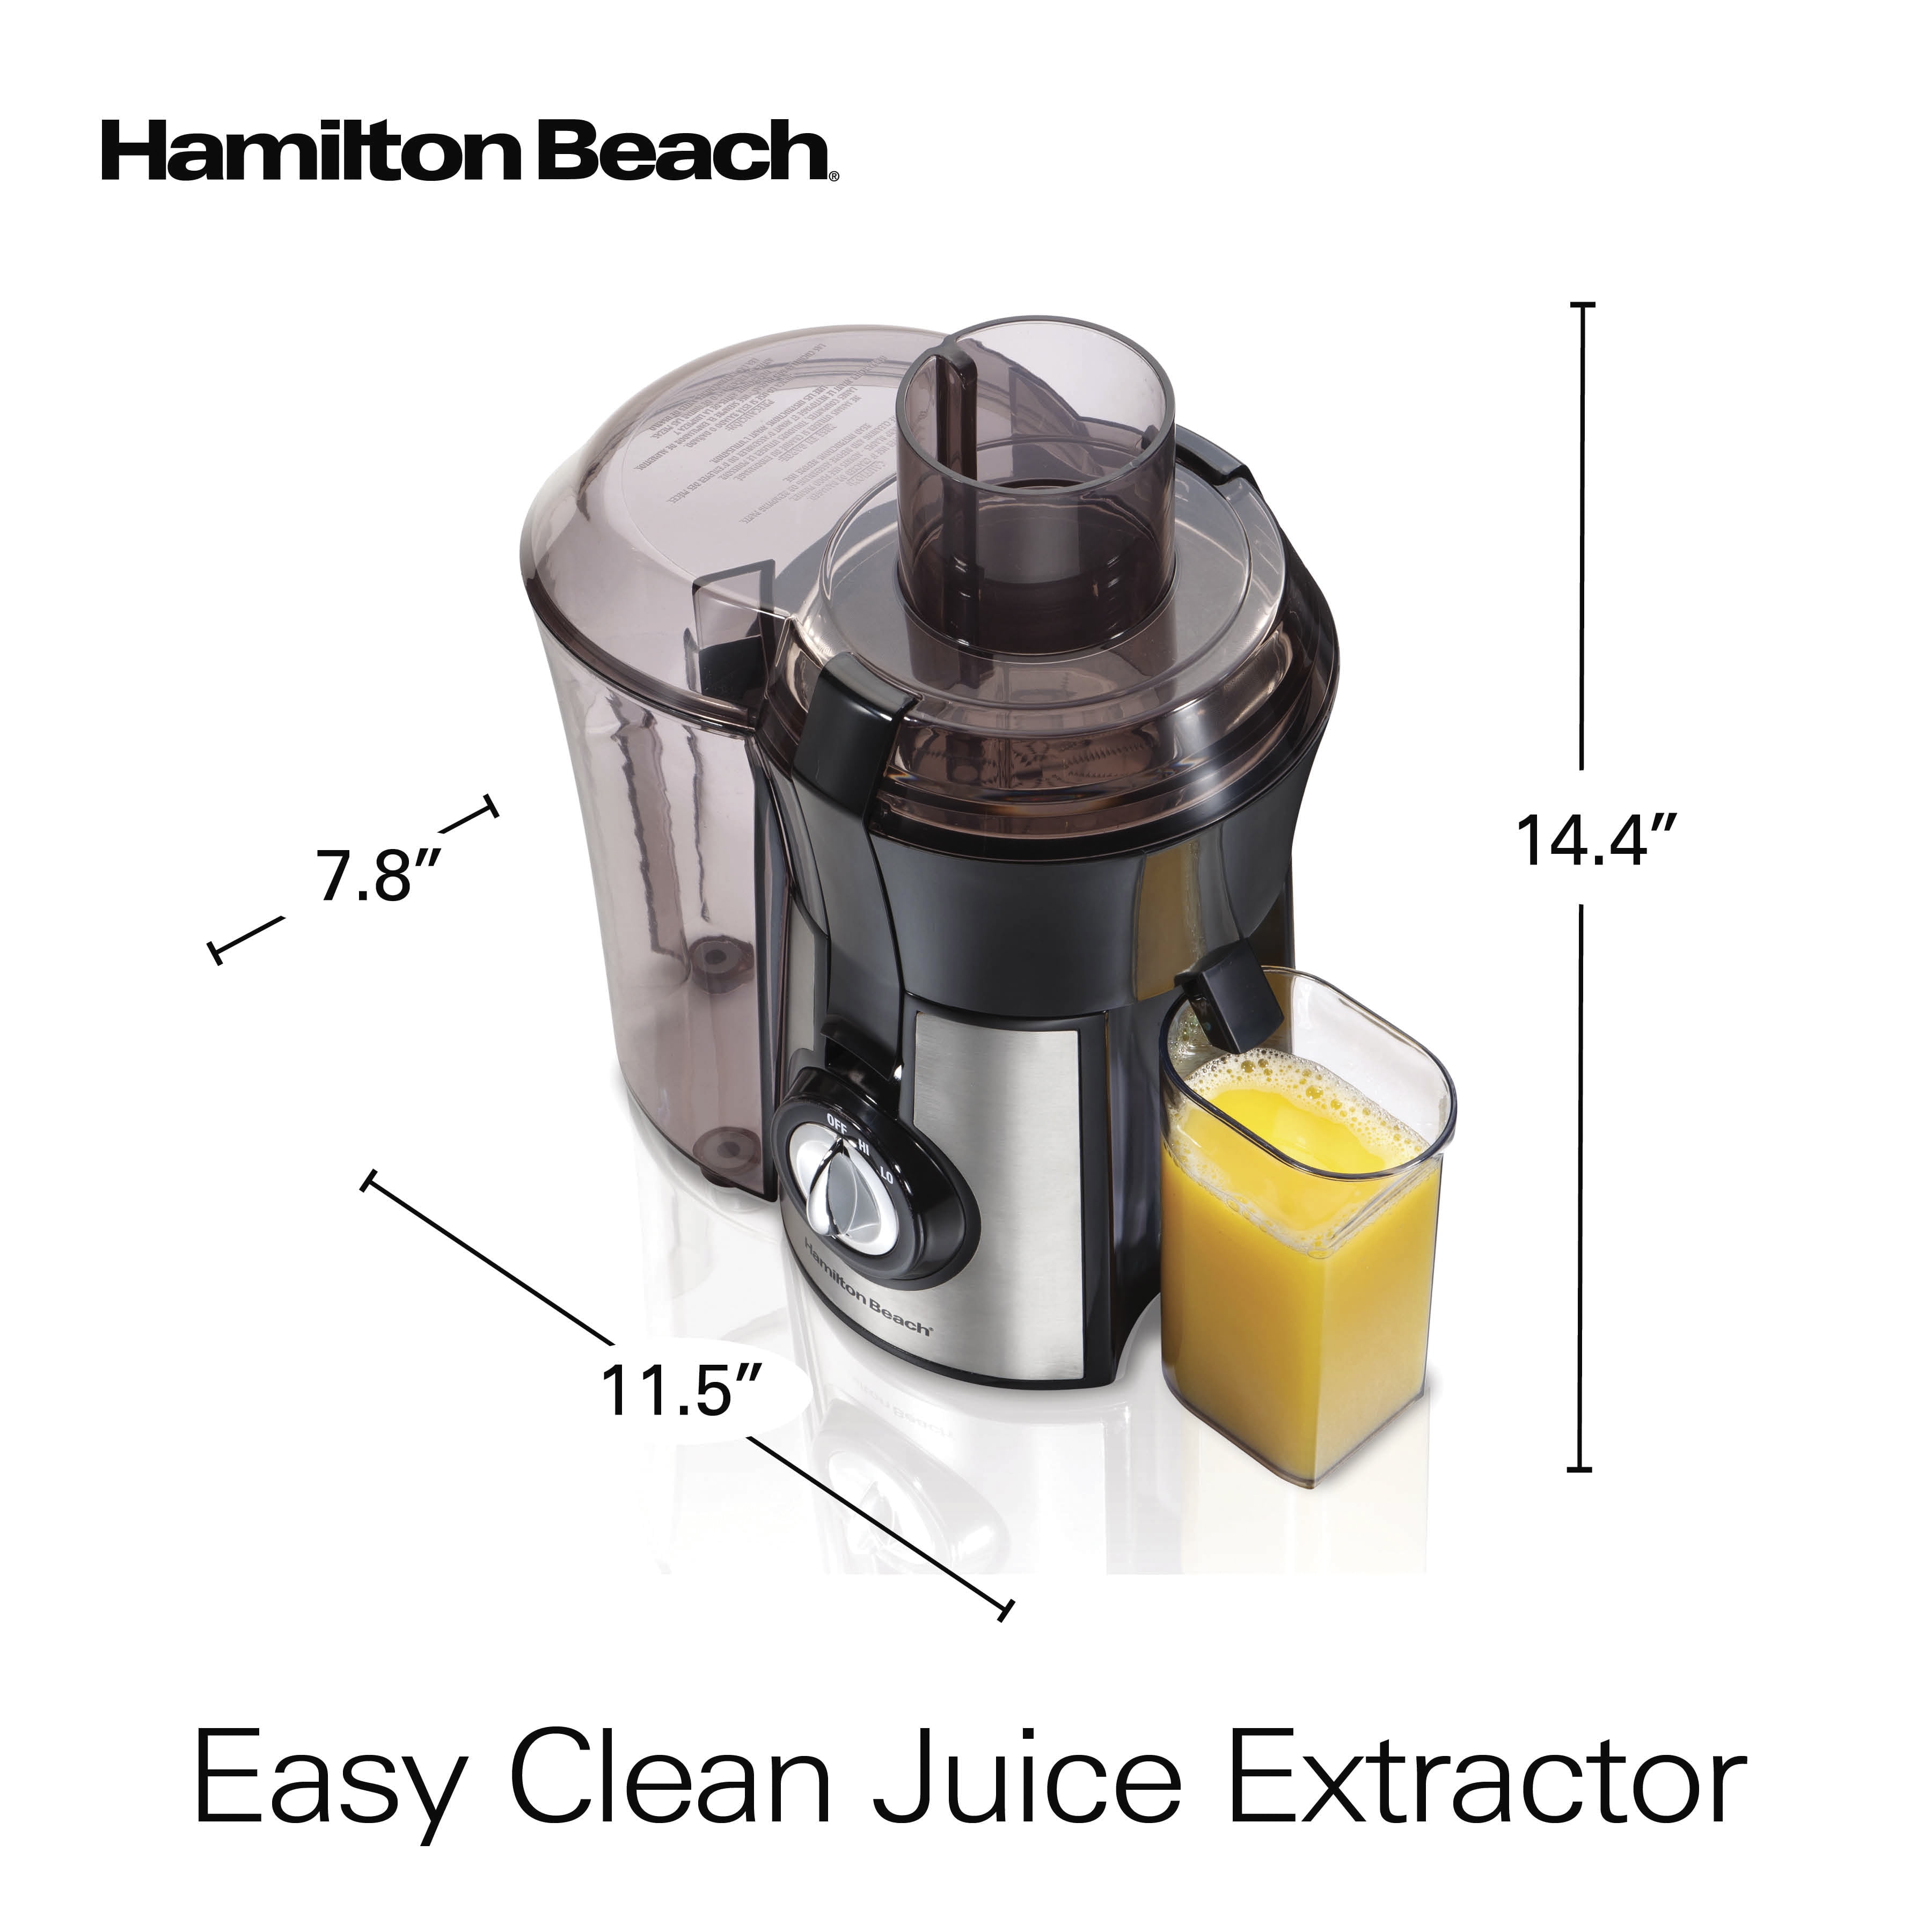 Hamilton Beach Juicer: Easy to Clean & Assemble